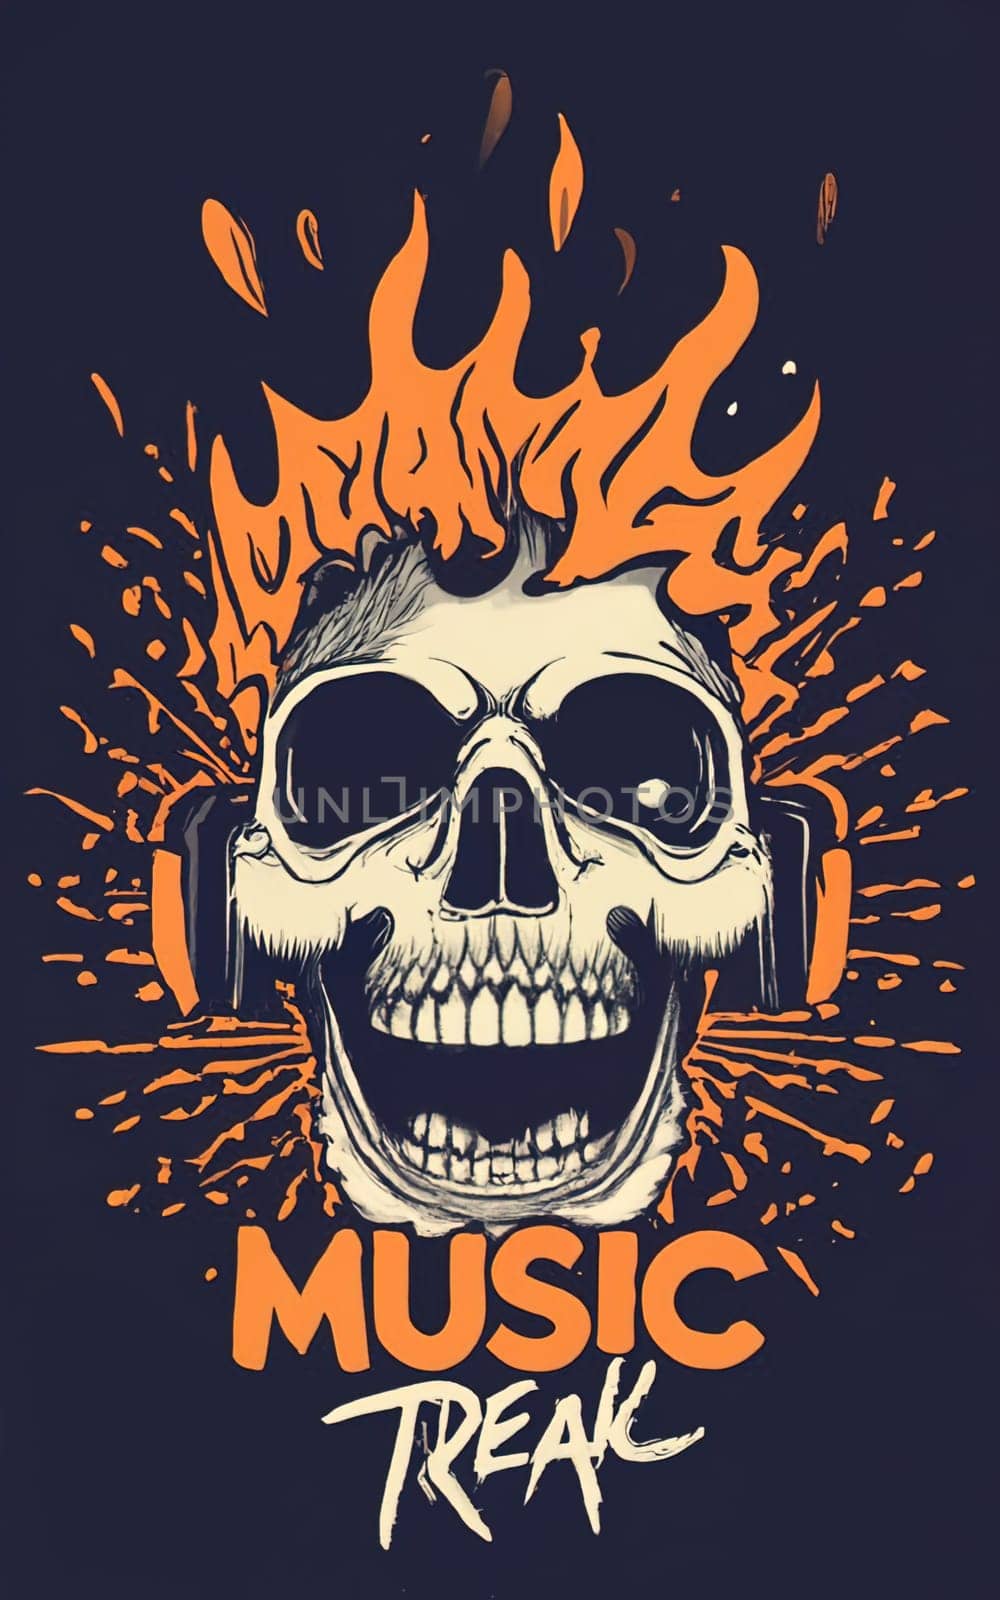 Terrifying Skull with Soul Emerging, 'Music Freak' Text - T-Shirt Illustration on Dark Background download image